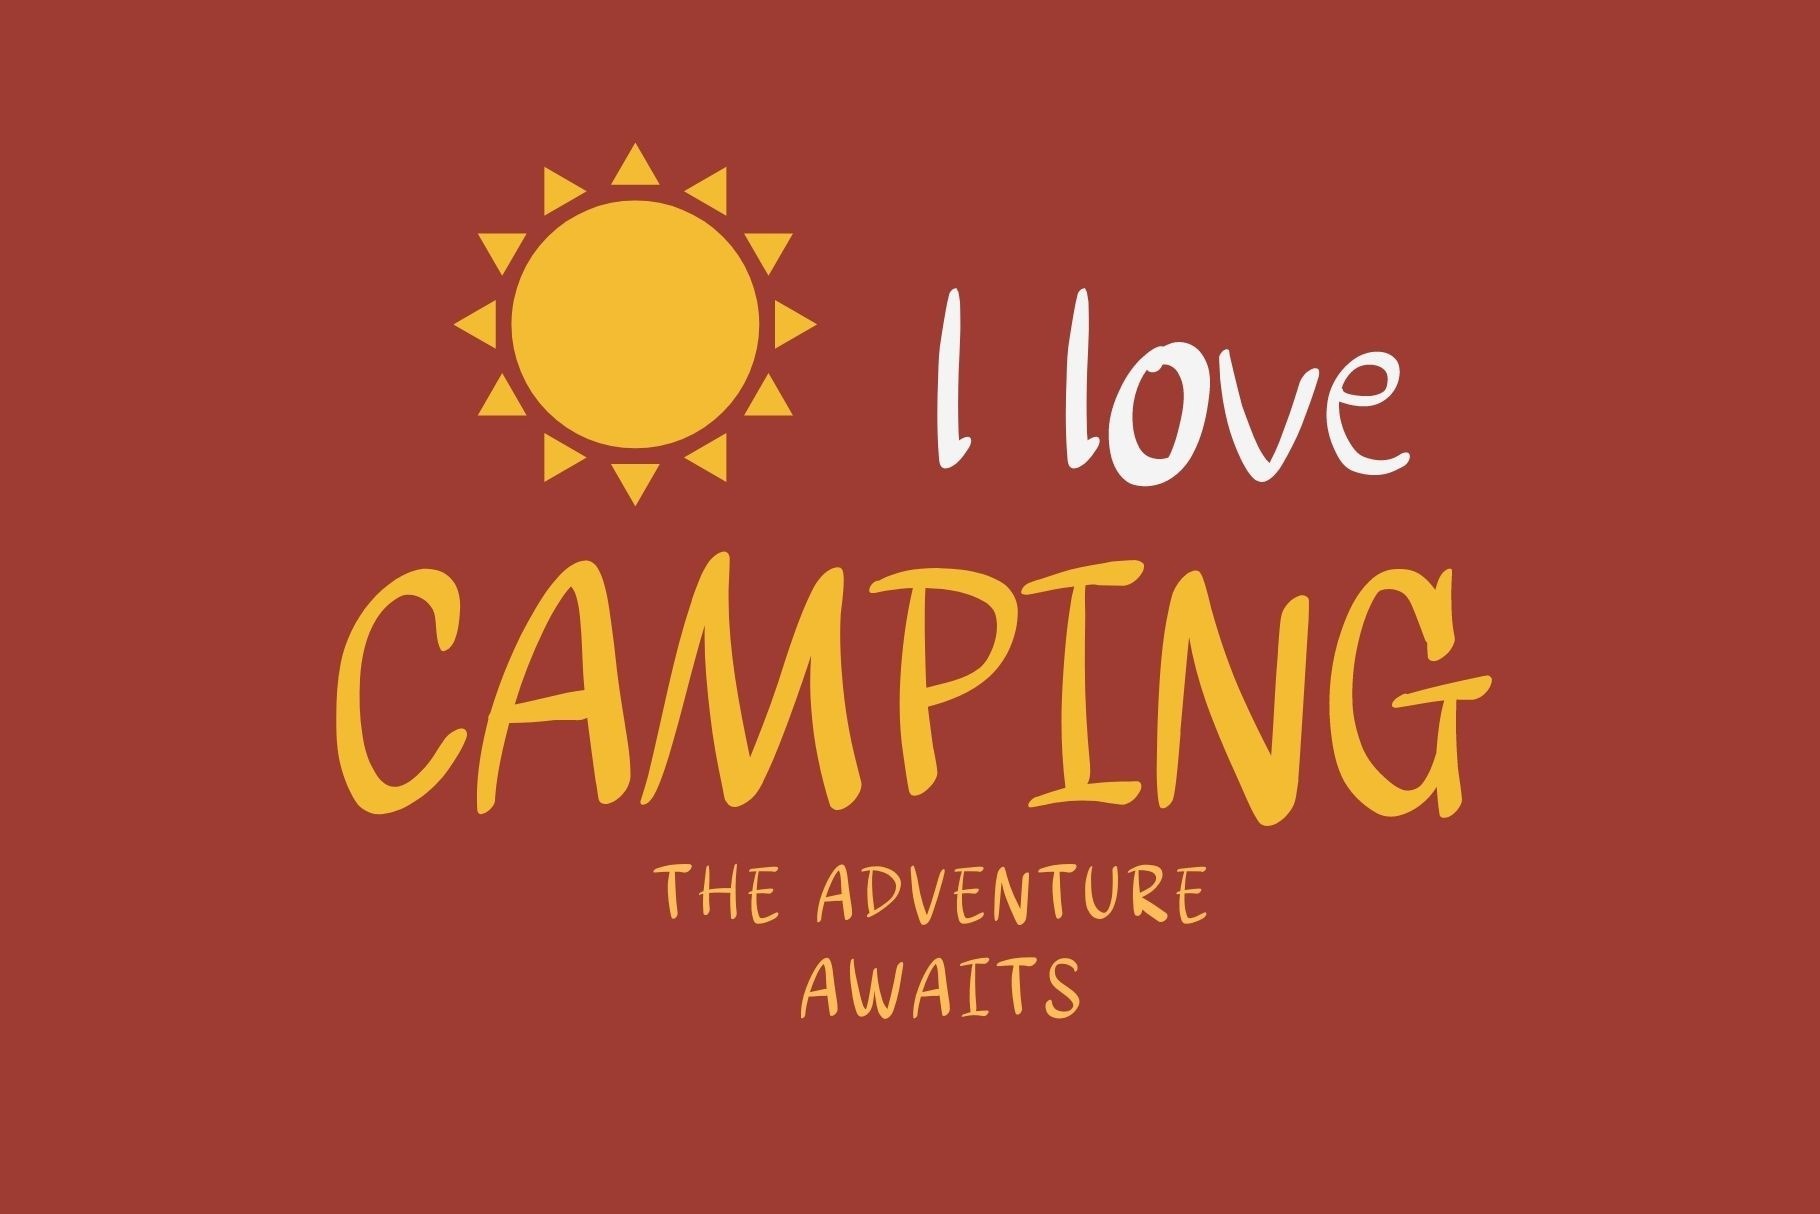 Campingo Regular Font preview